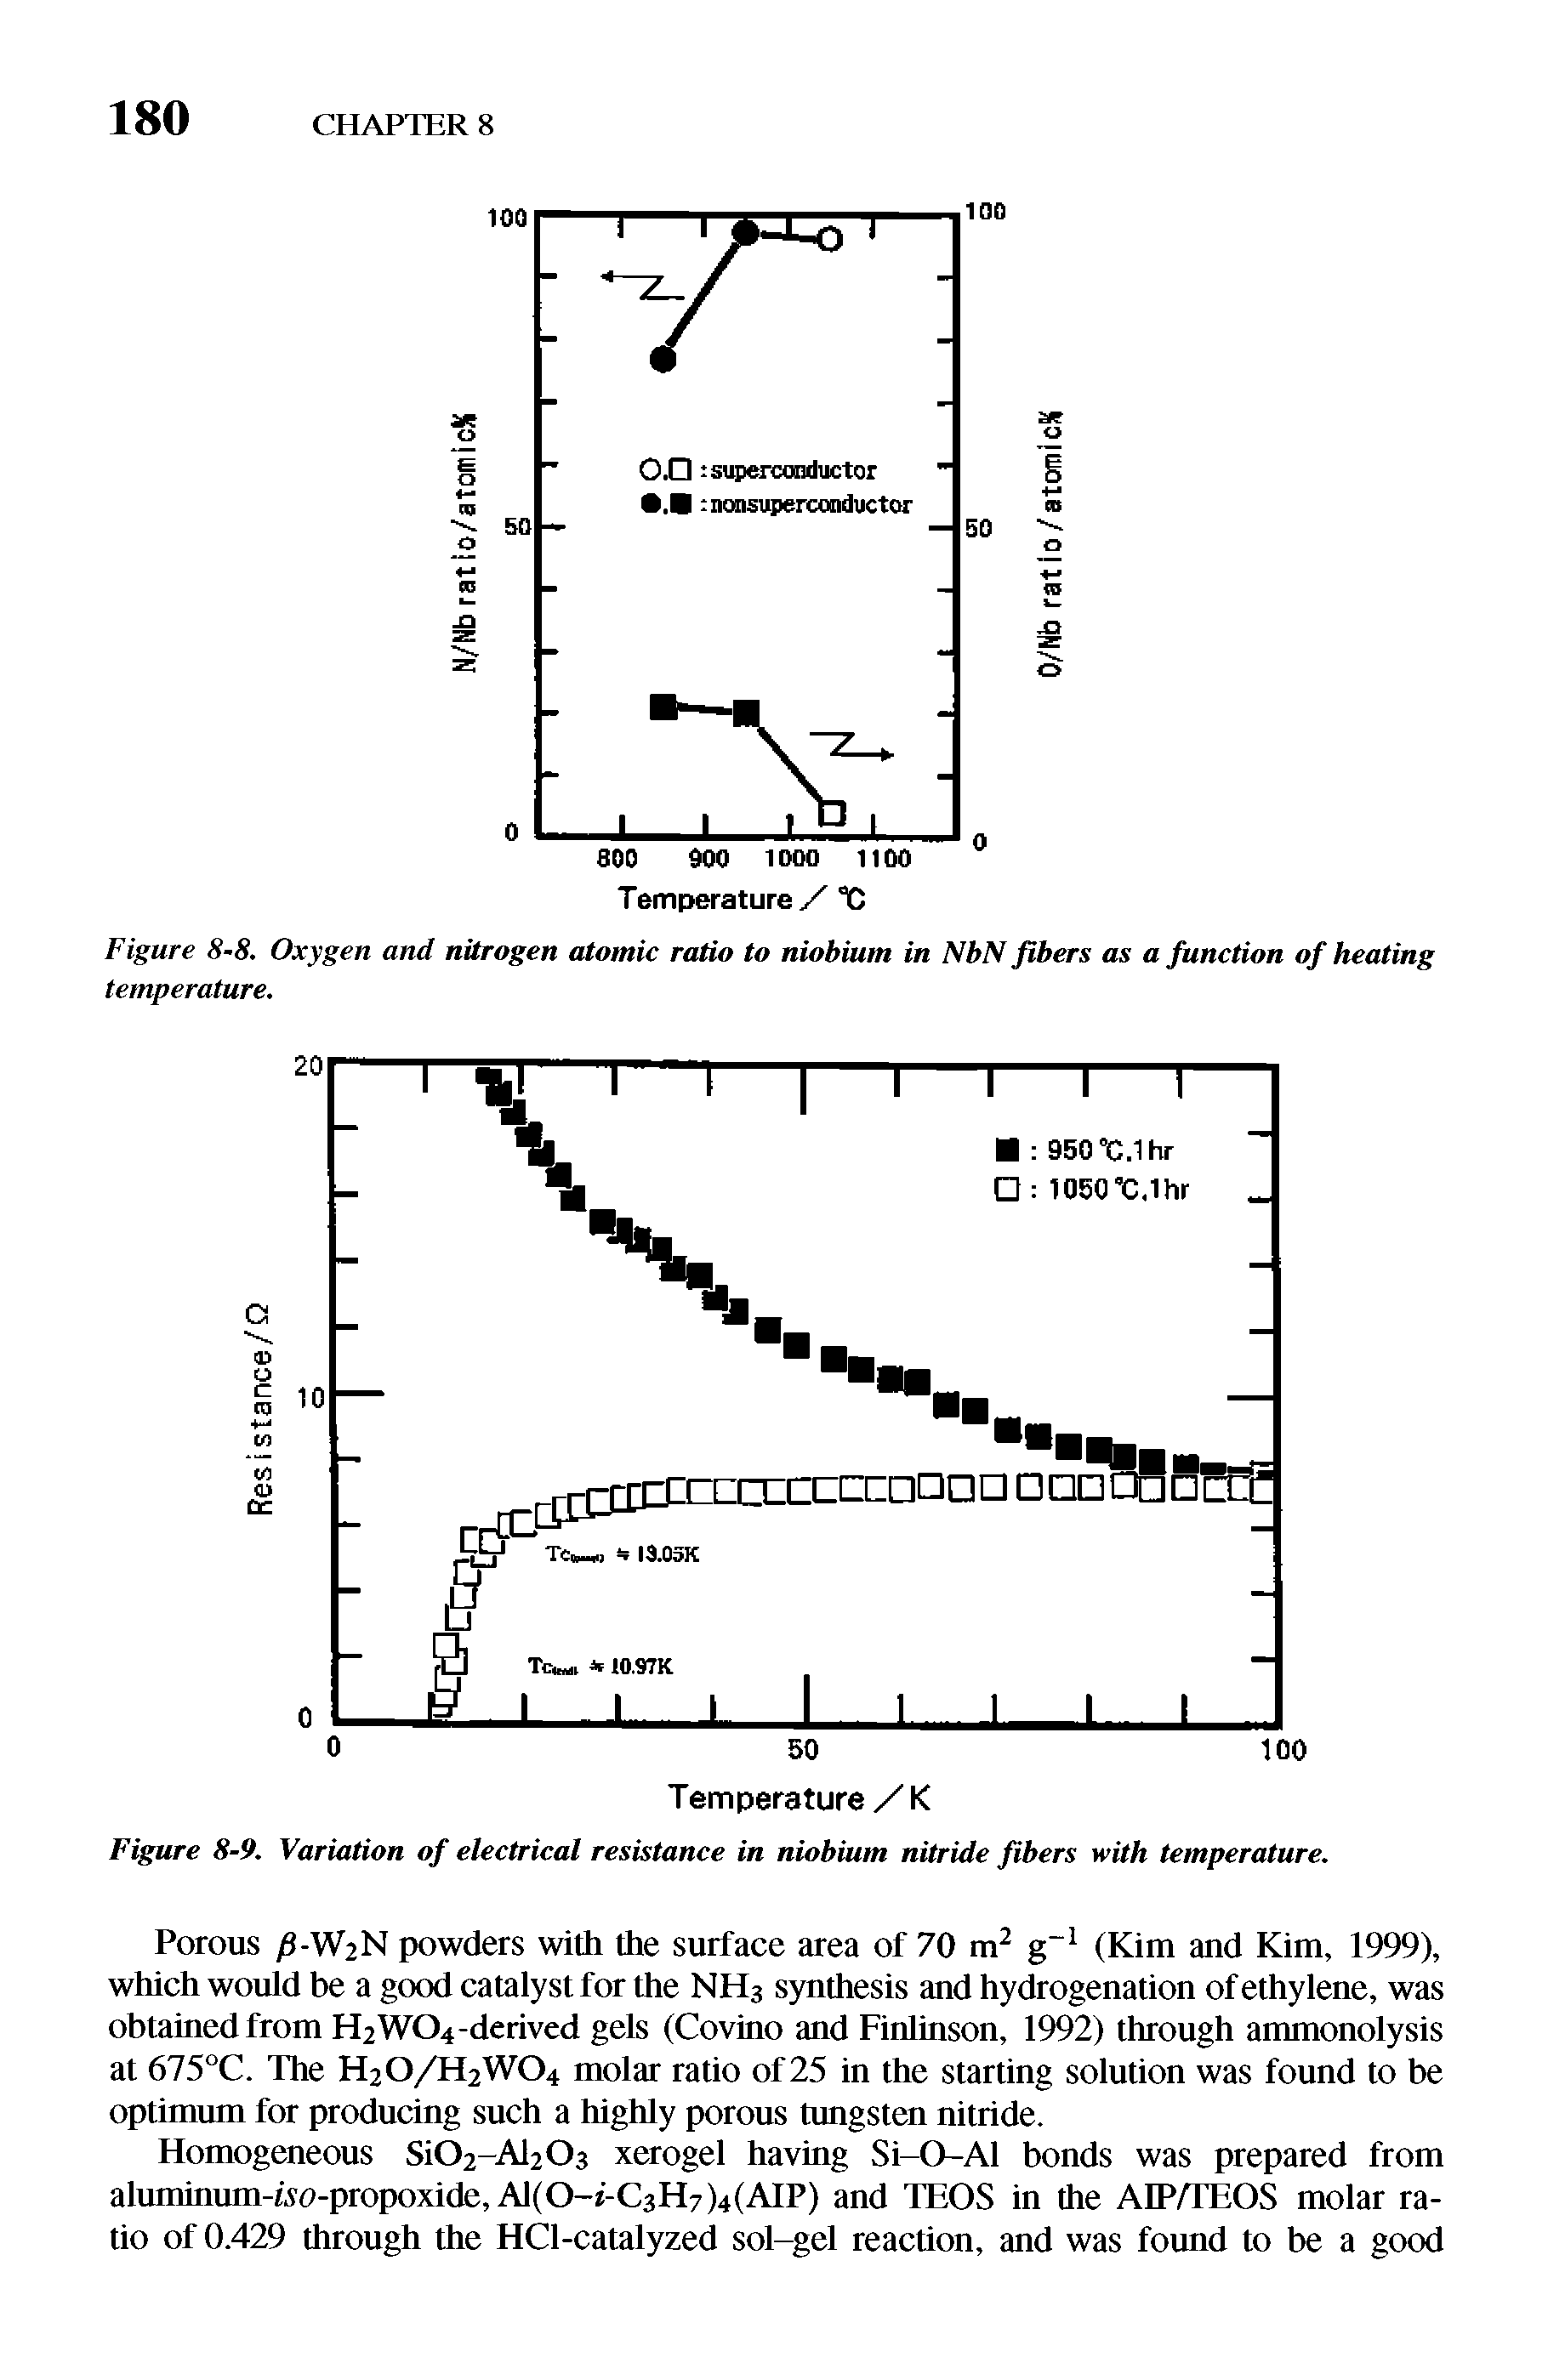 Figure 8-9. Variation of electrical resistance in niobium nitride fibers with temperature.